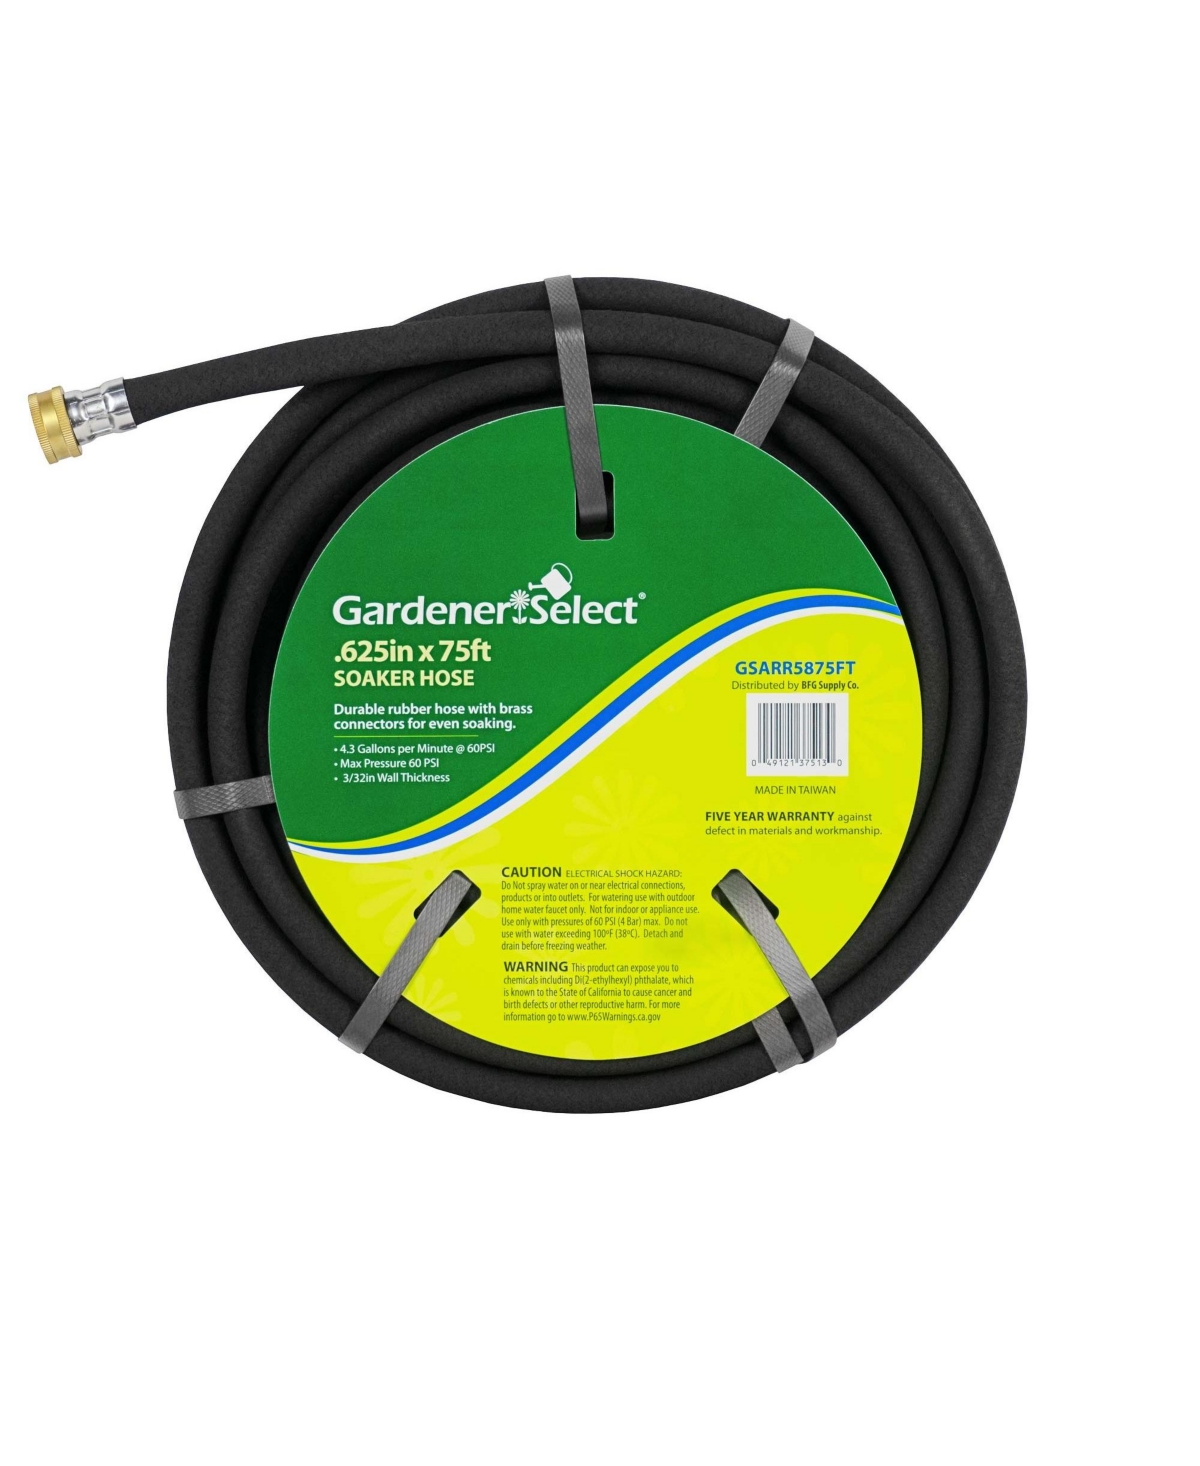 Gardener Select Durable Soaker Hose Brass Connectors, Black .62 Inches x 75 Ft - Black